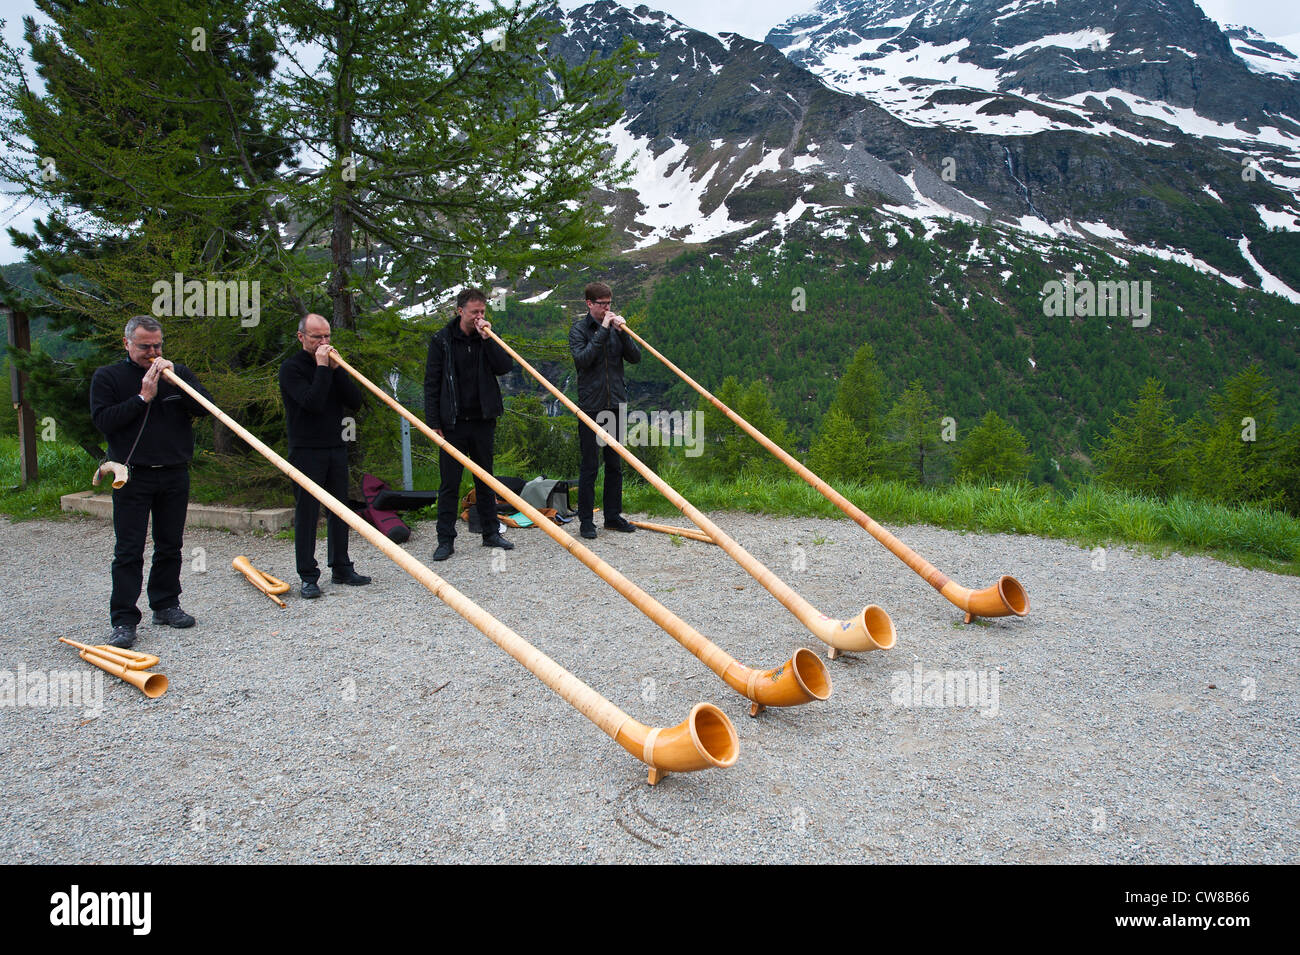 Men playing alpenhorn or alpine horn, Switzerland. Stock Photo